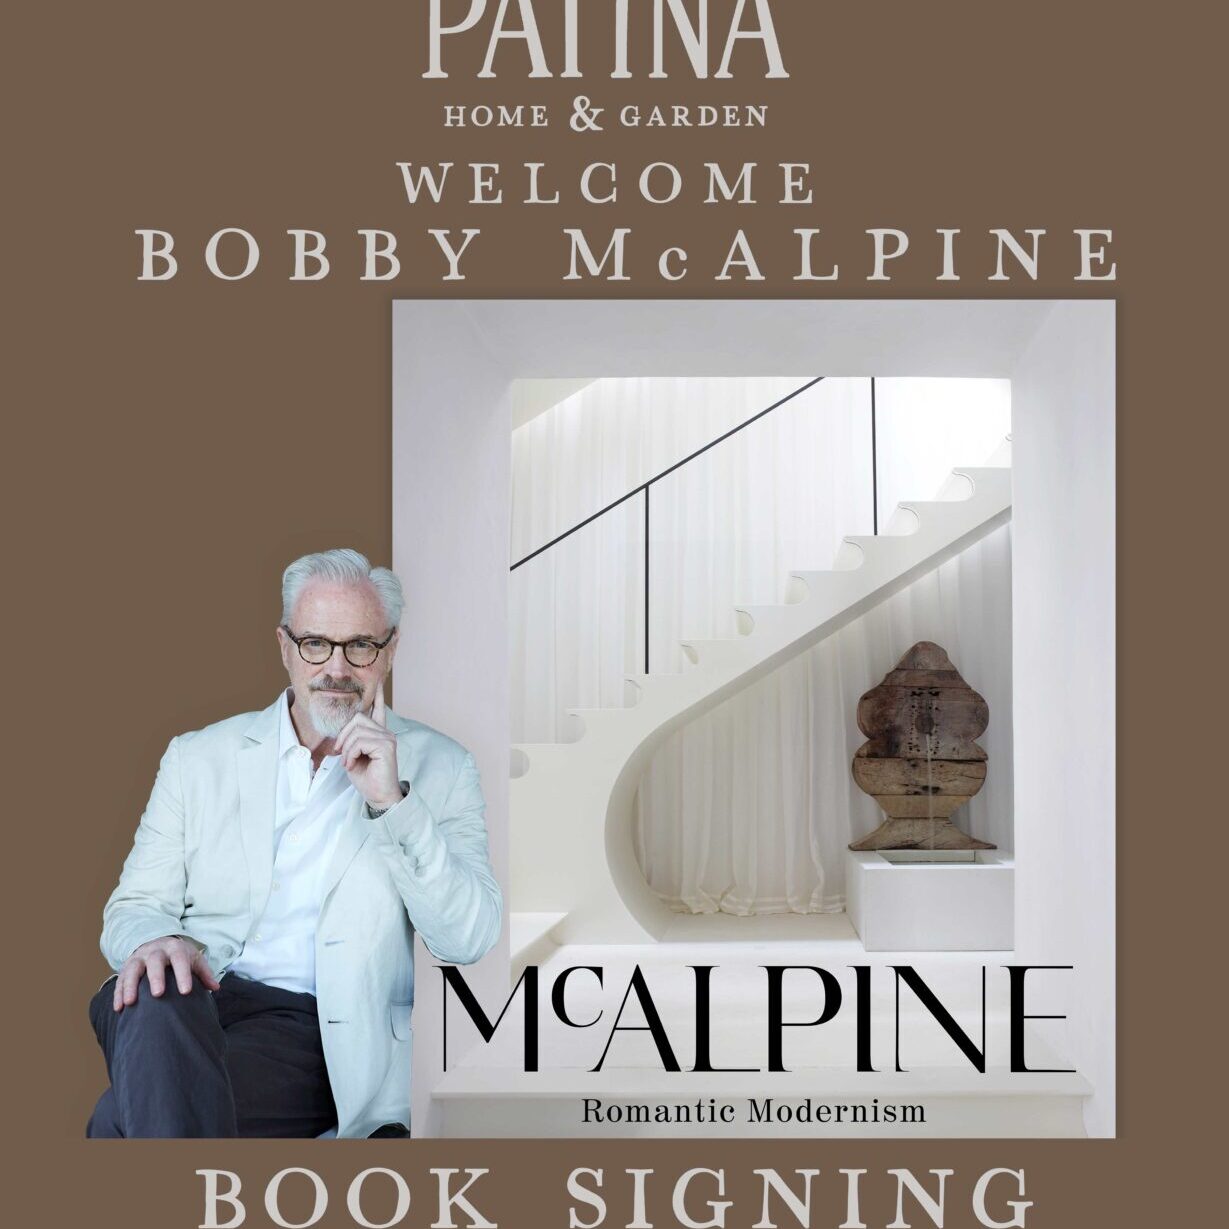 bobby-mcalpine-book-signing-invite